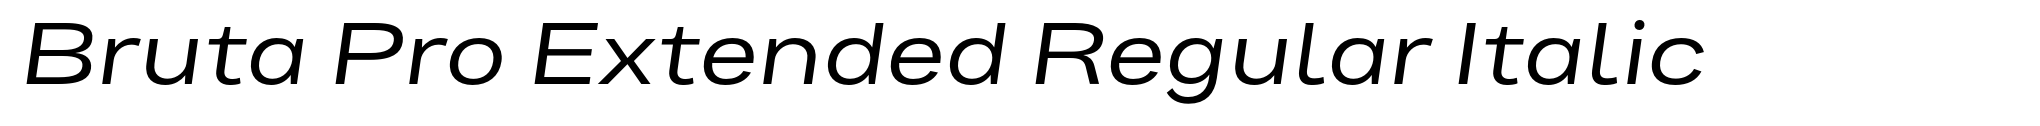 Bruta Pro Extended Regular Italic image